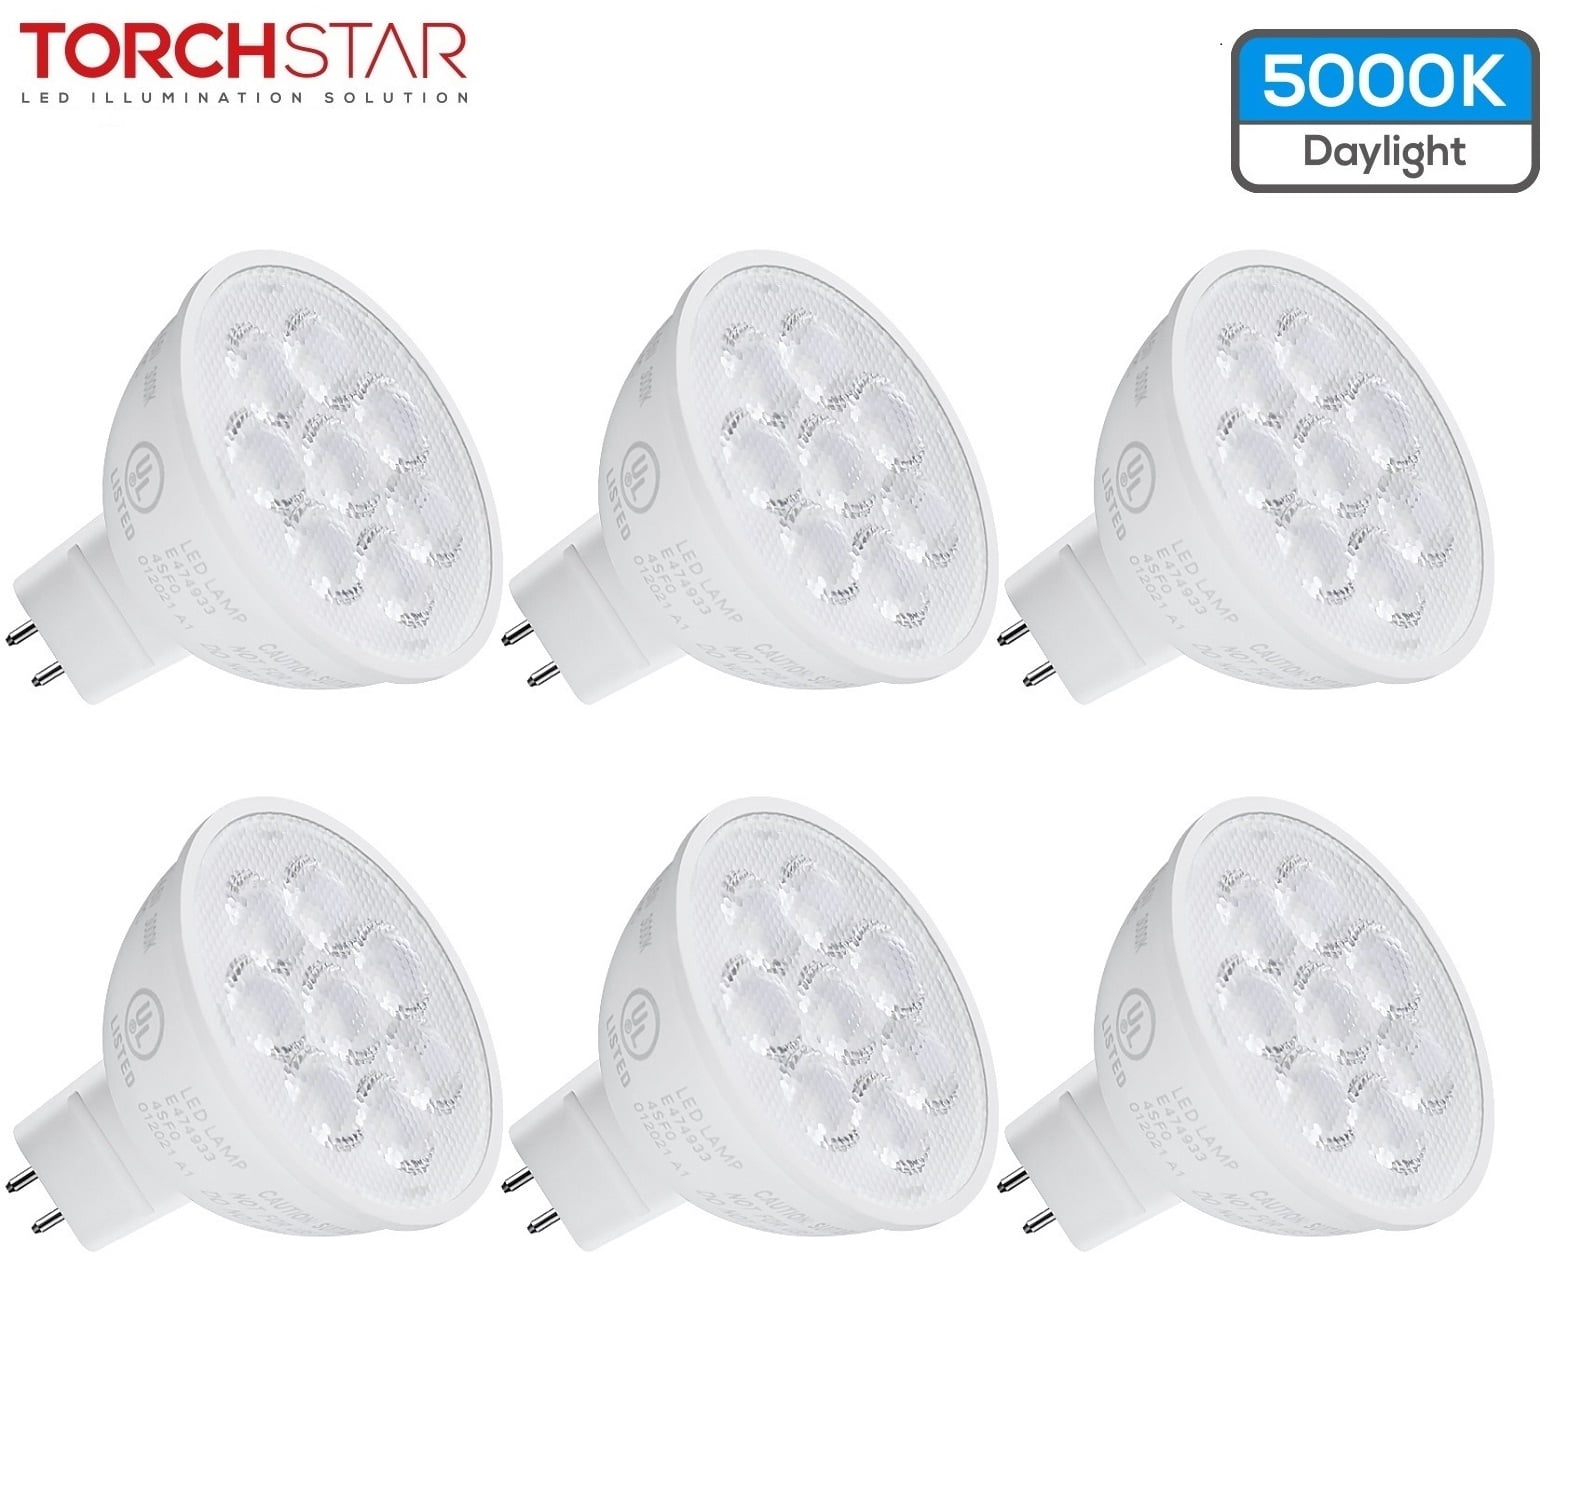 48 LED Bulb Lamp Spotlight g5.3 gu5.3 12v 50mm mr16 cold low consumption 